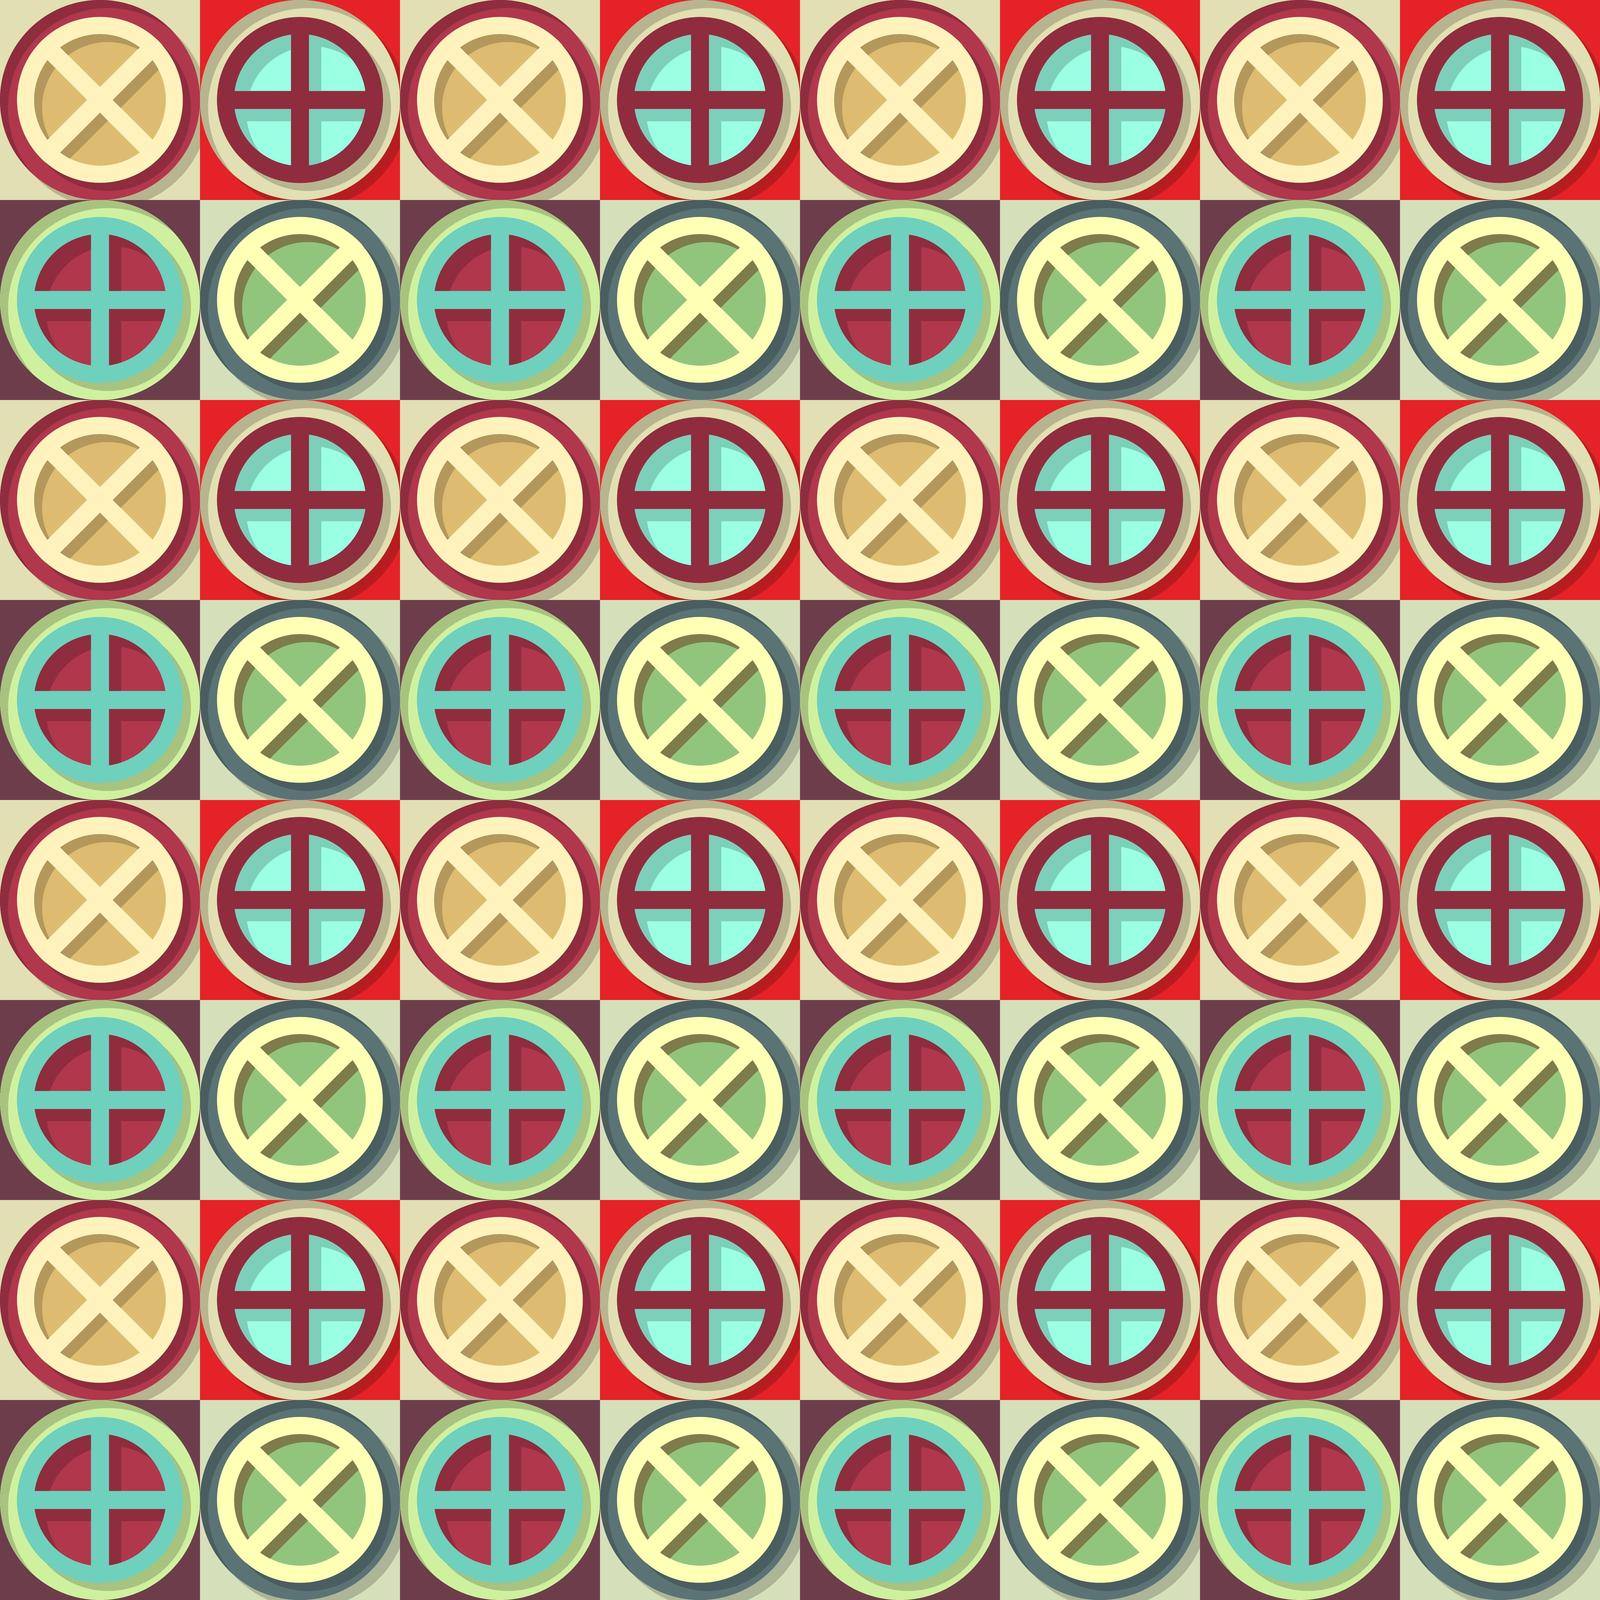 Hipster geometric pattern by Lirch